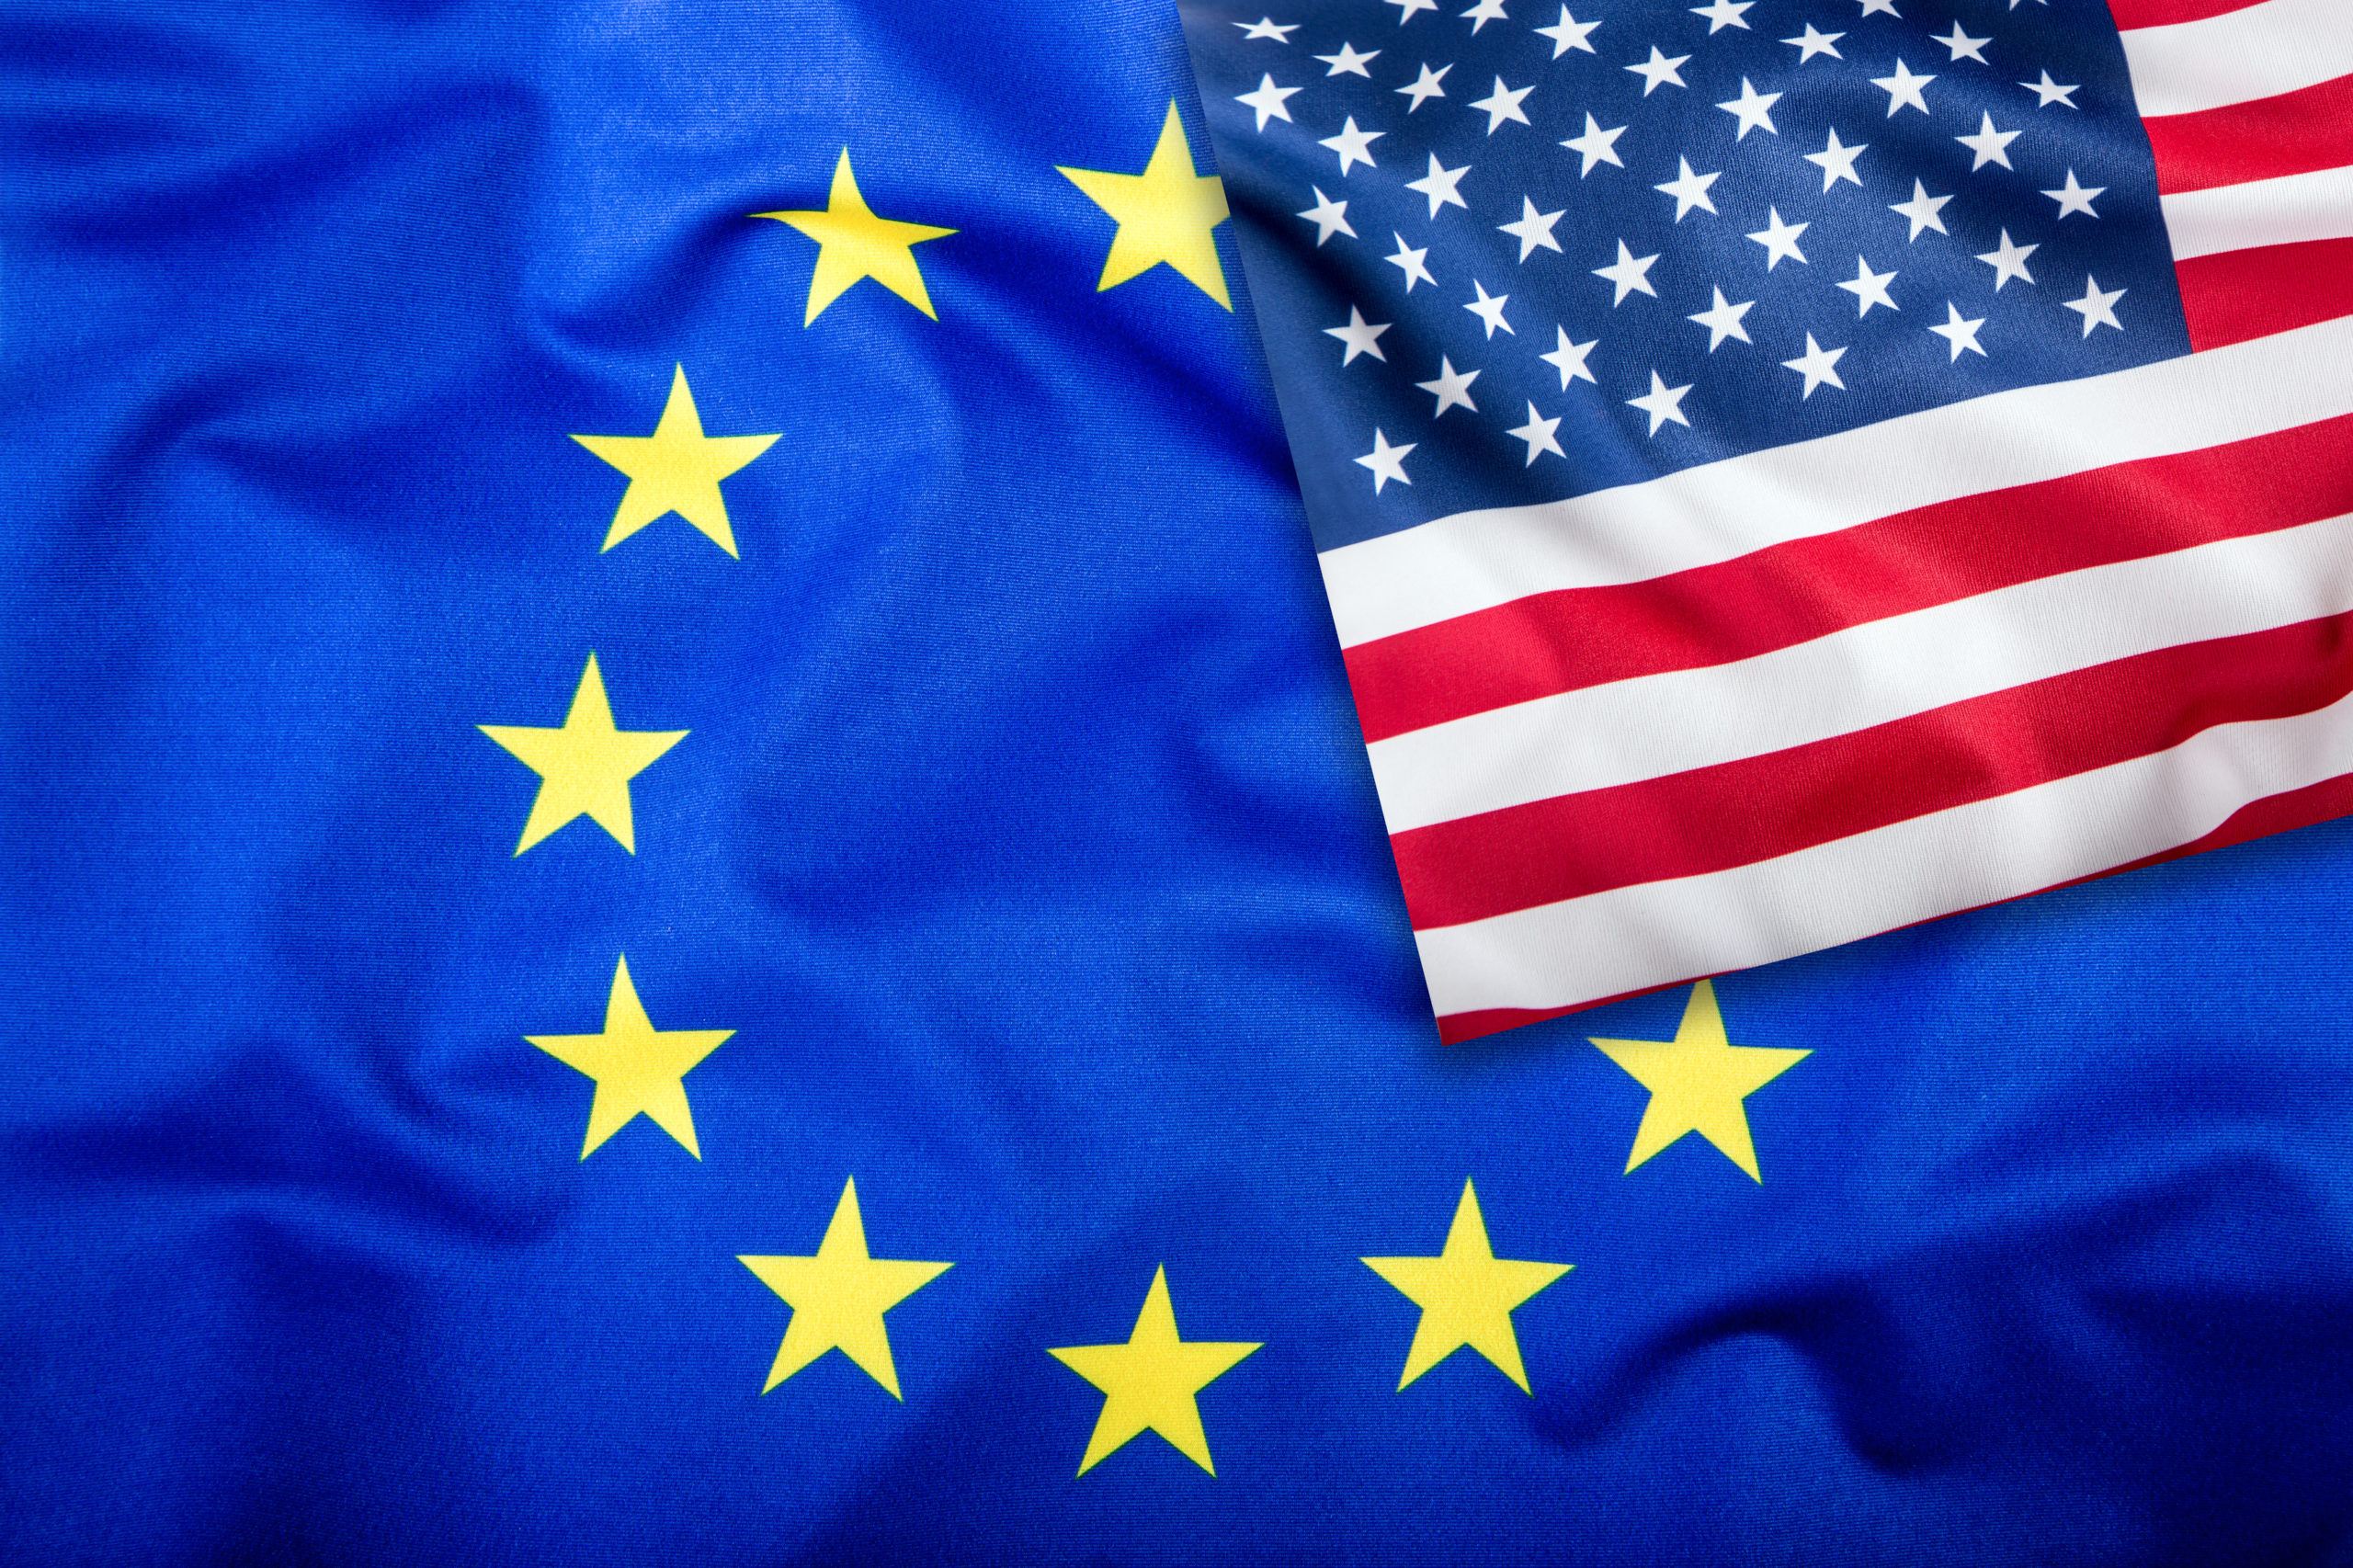 Flags of the USA and the European Union. American Flag and EU Flag. Flag inside stars. World flag concept